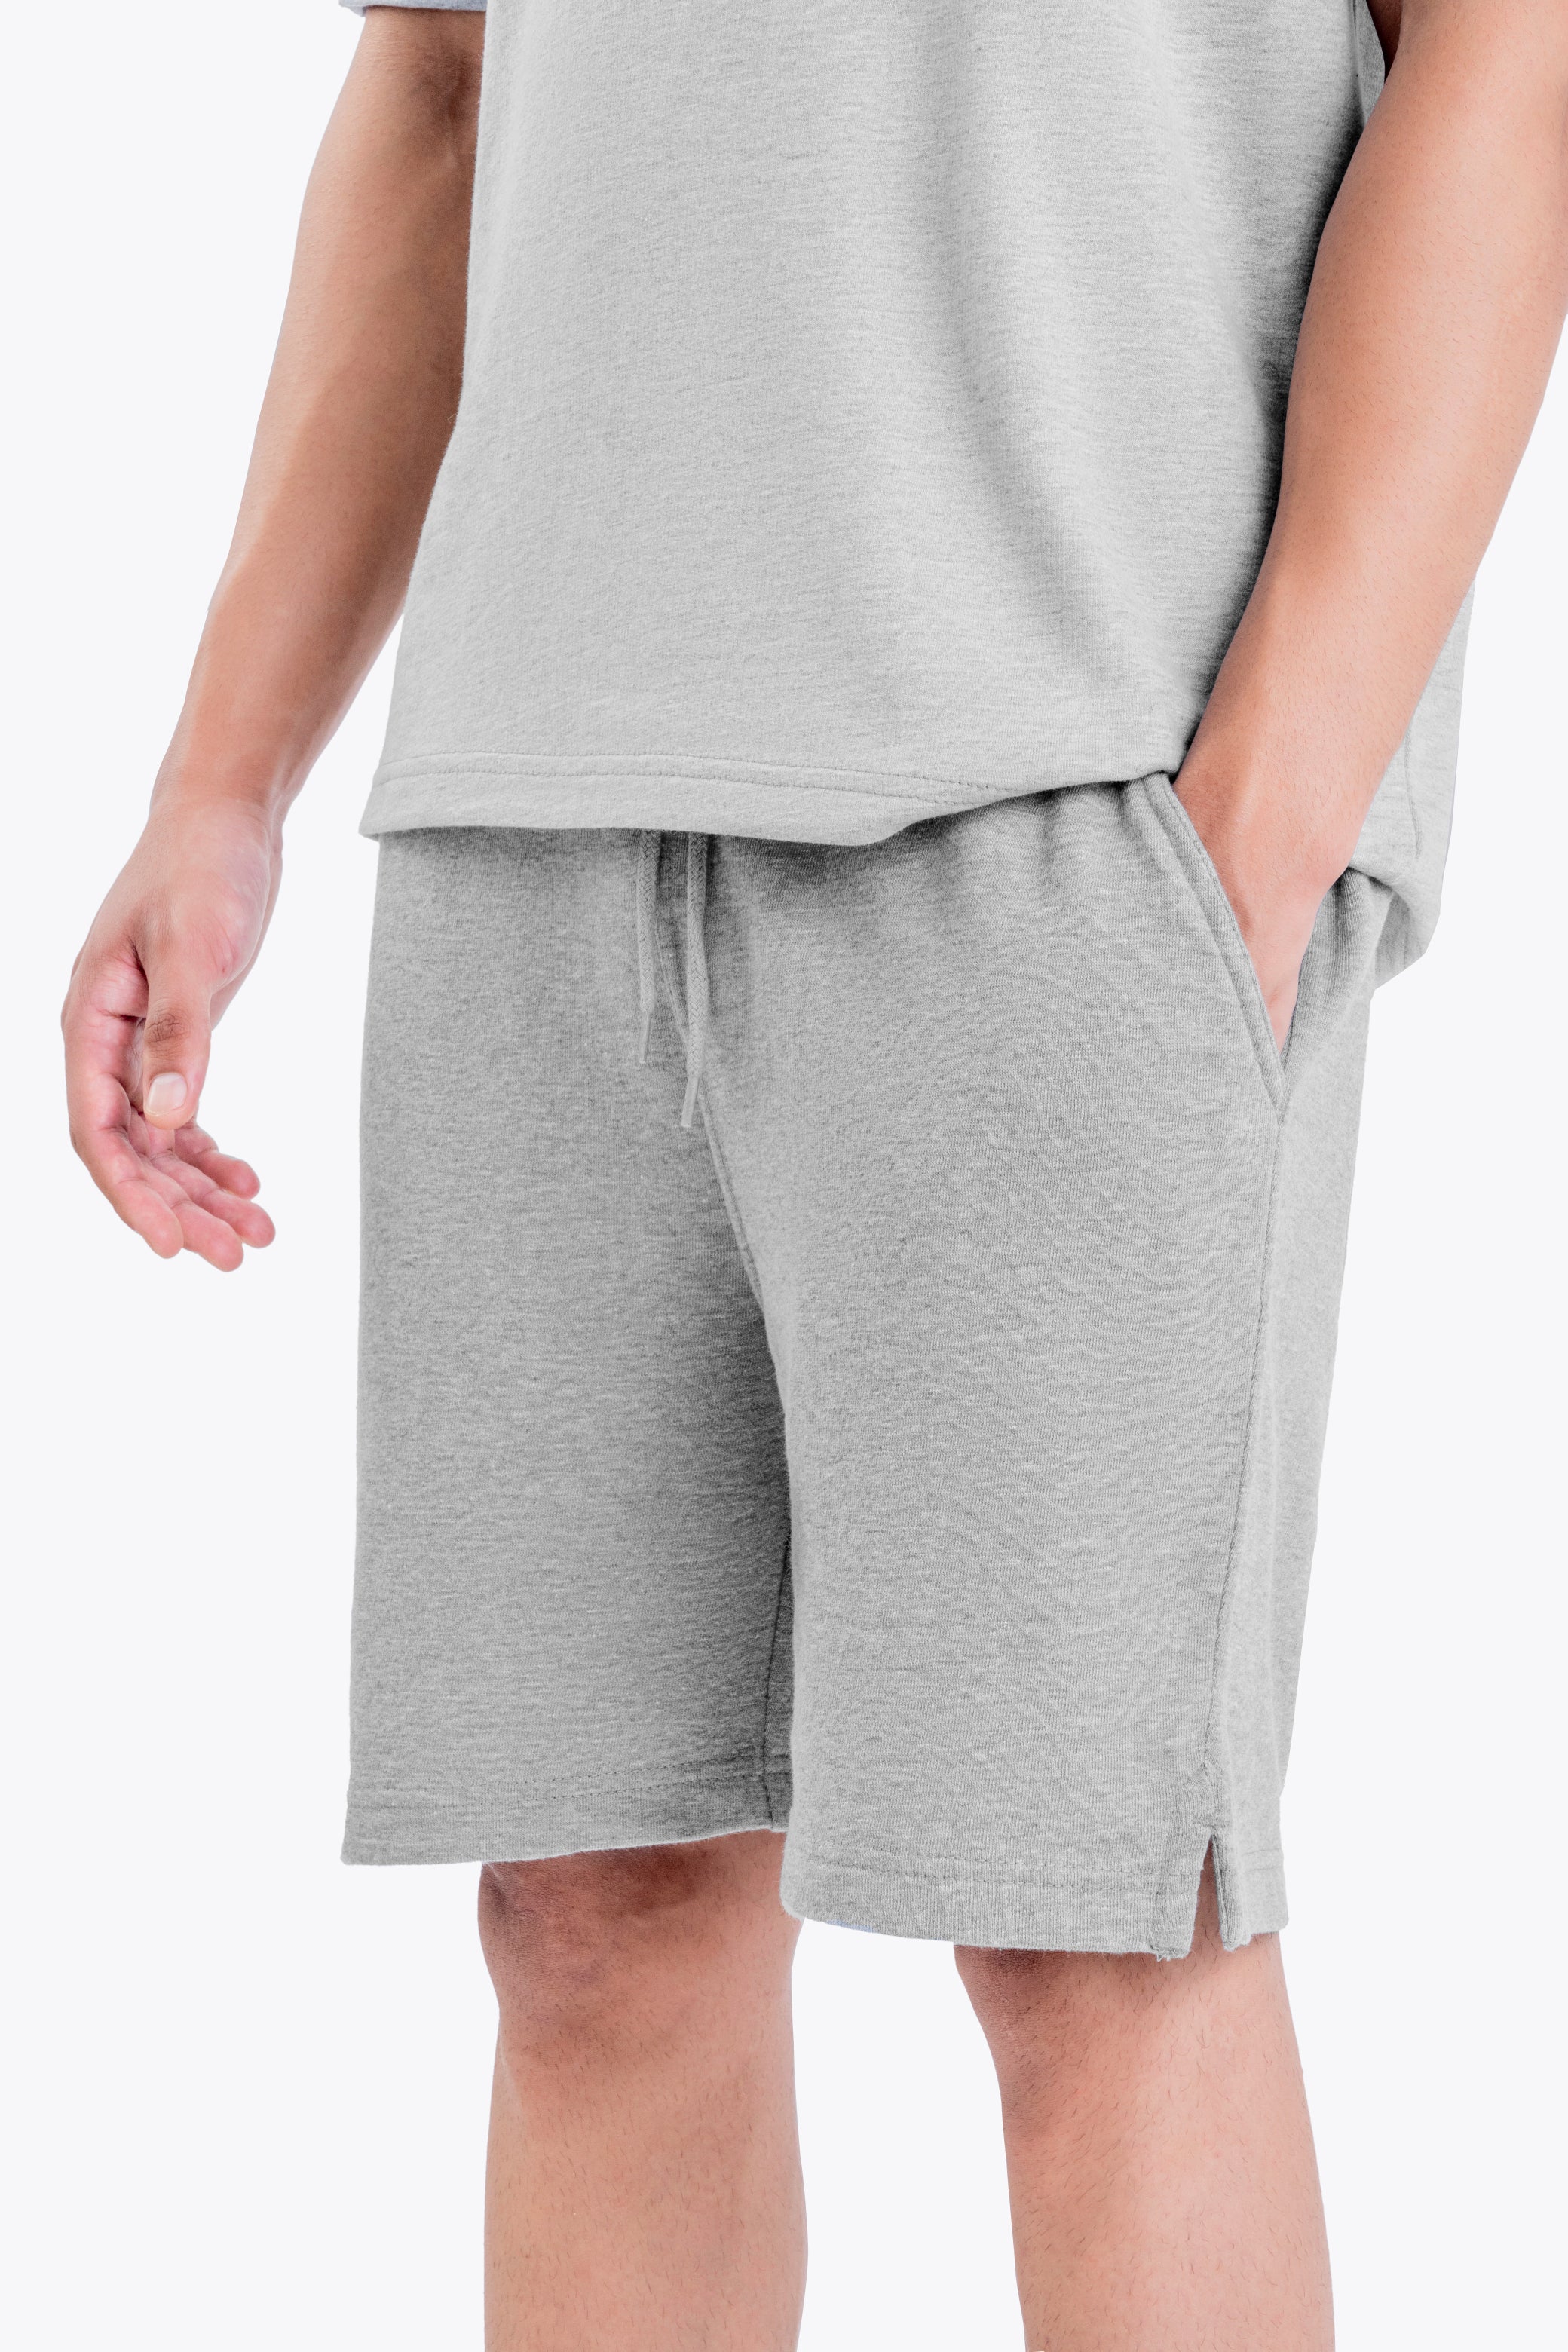 Steel Grey Shorts